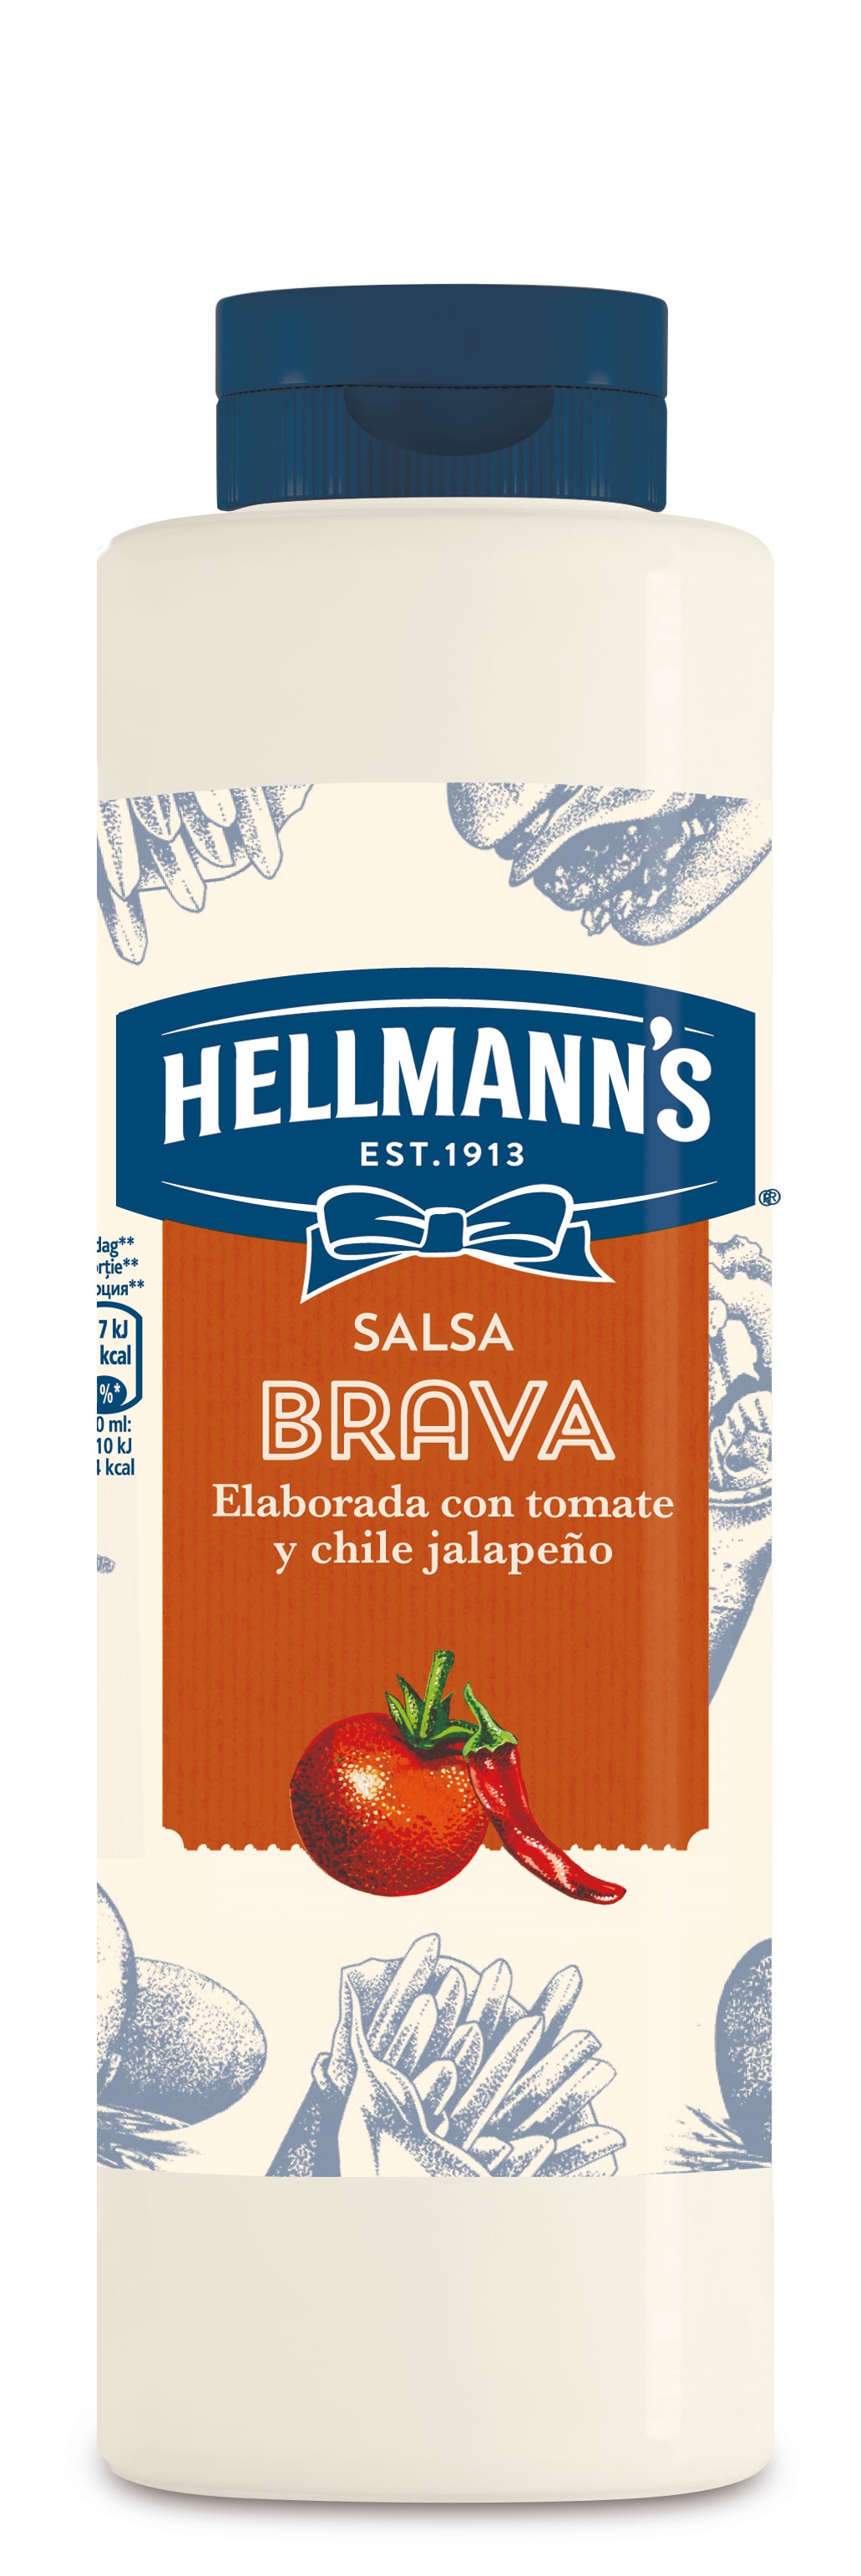 Salsa Brava Hellmann's botella 850ML Sin Gluten - Salsa Especial Brava Hellmann’s. Nuevos sabores en un práctico envase